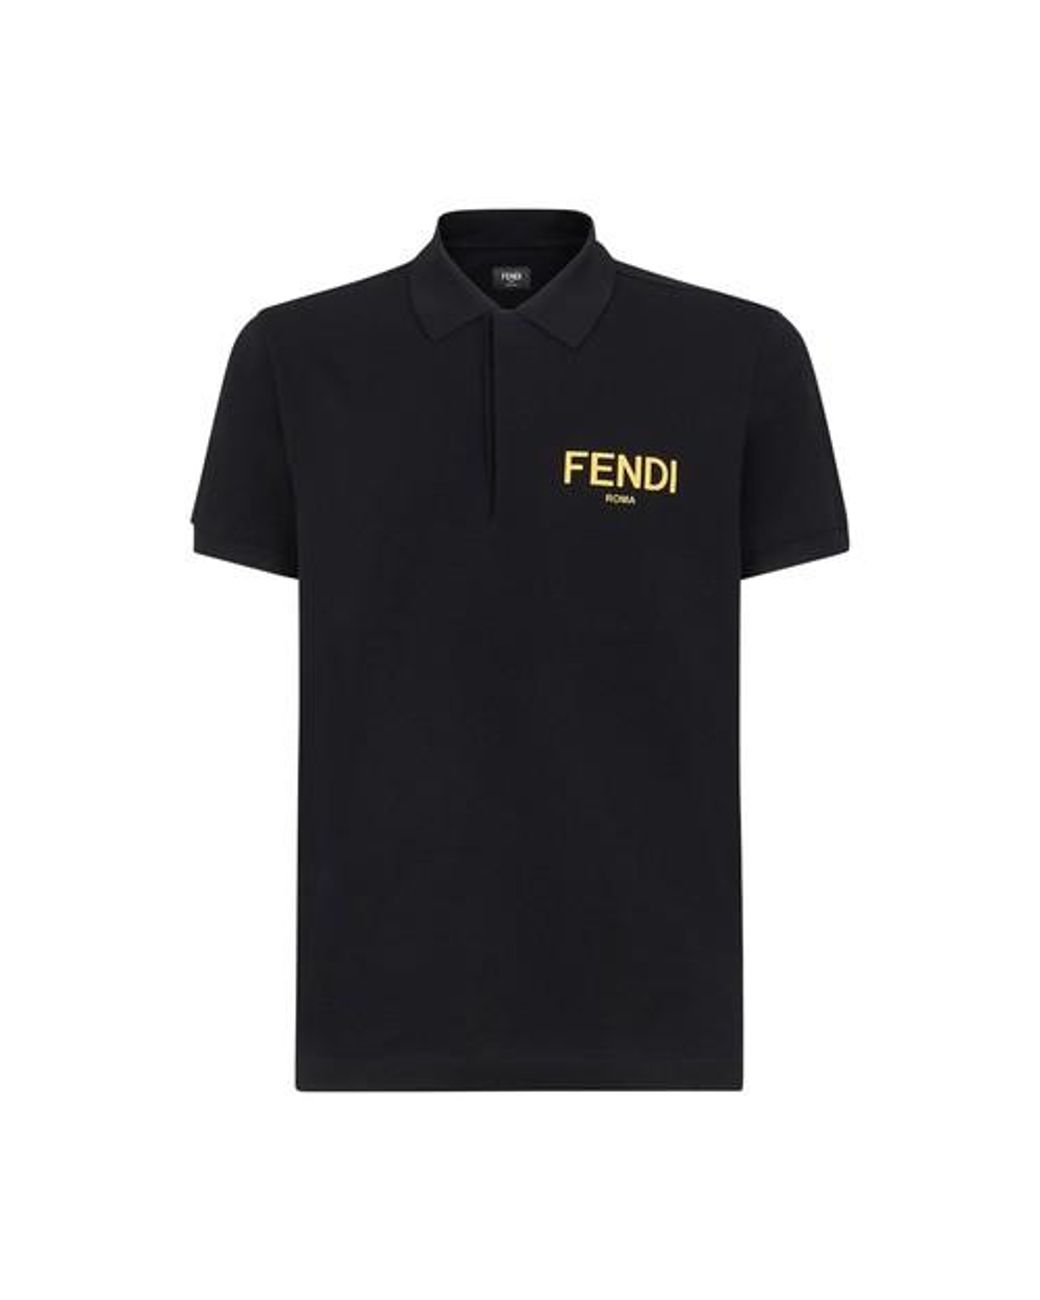 Fendi Cotton Polo Shirt in Black for Men - Lyst